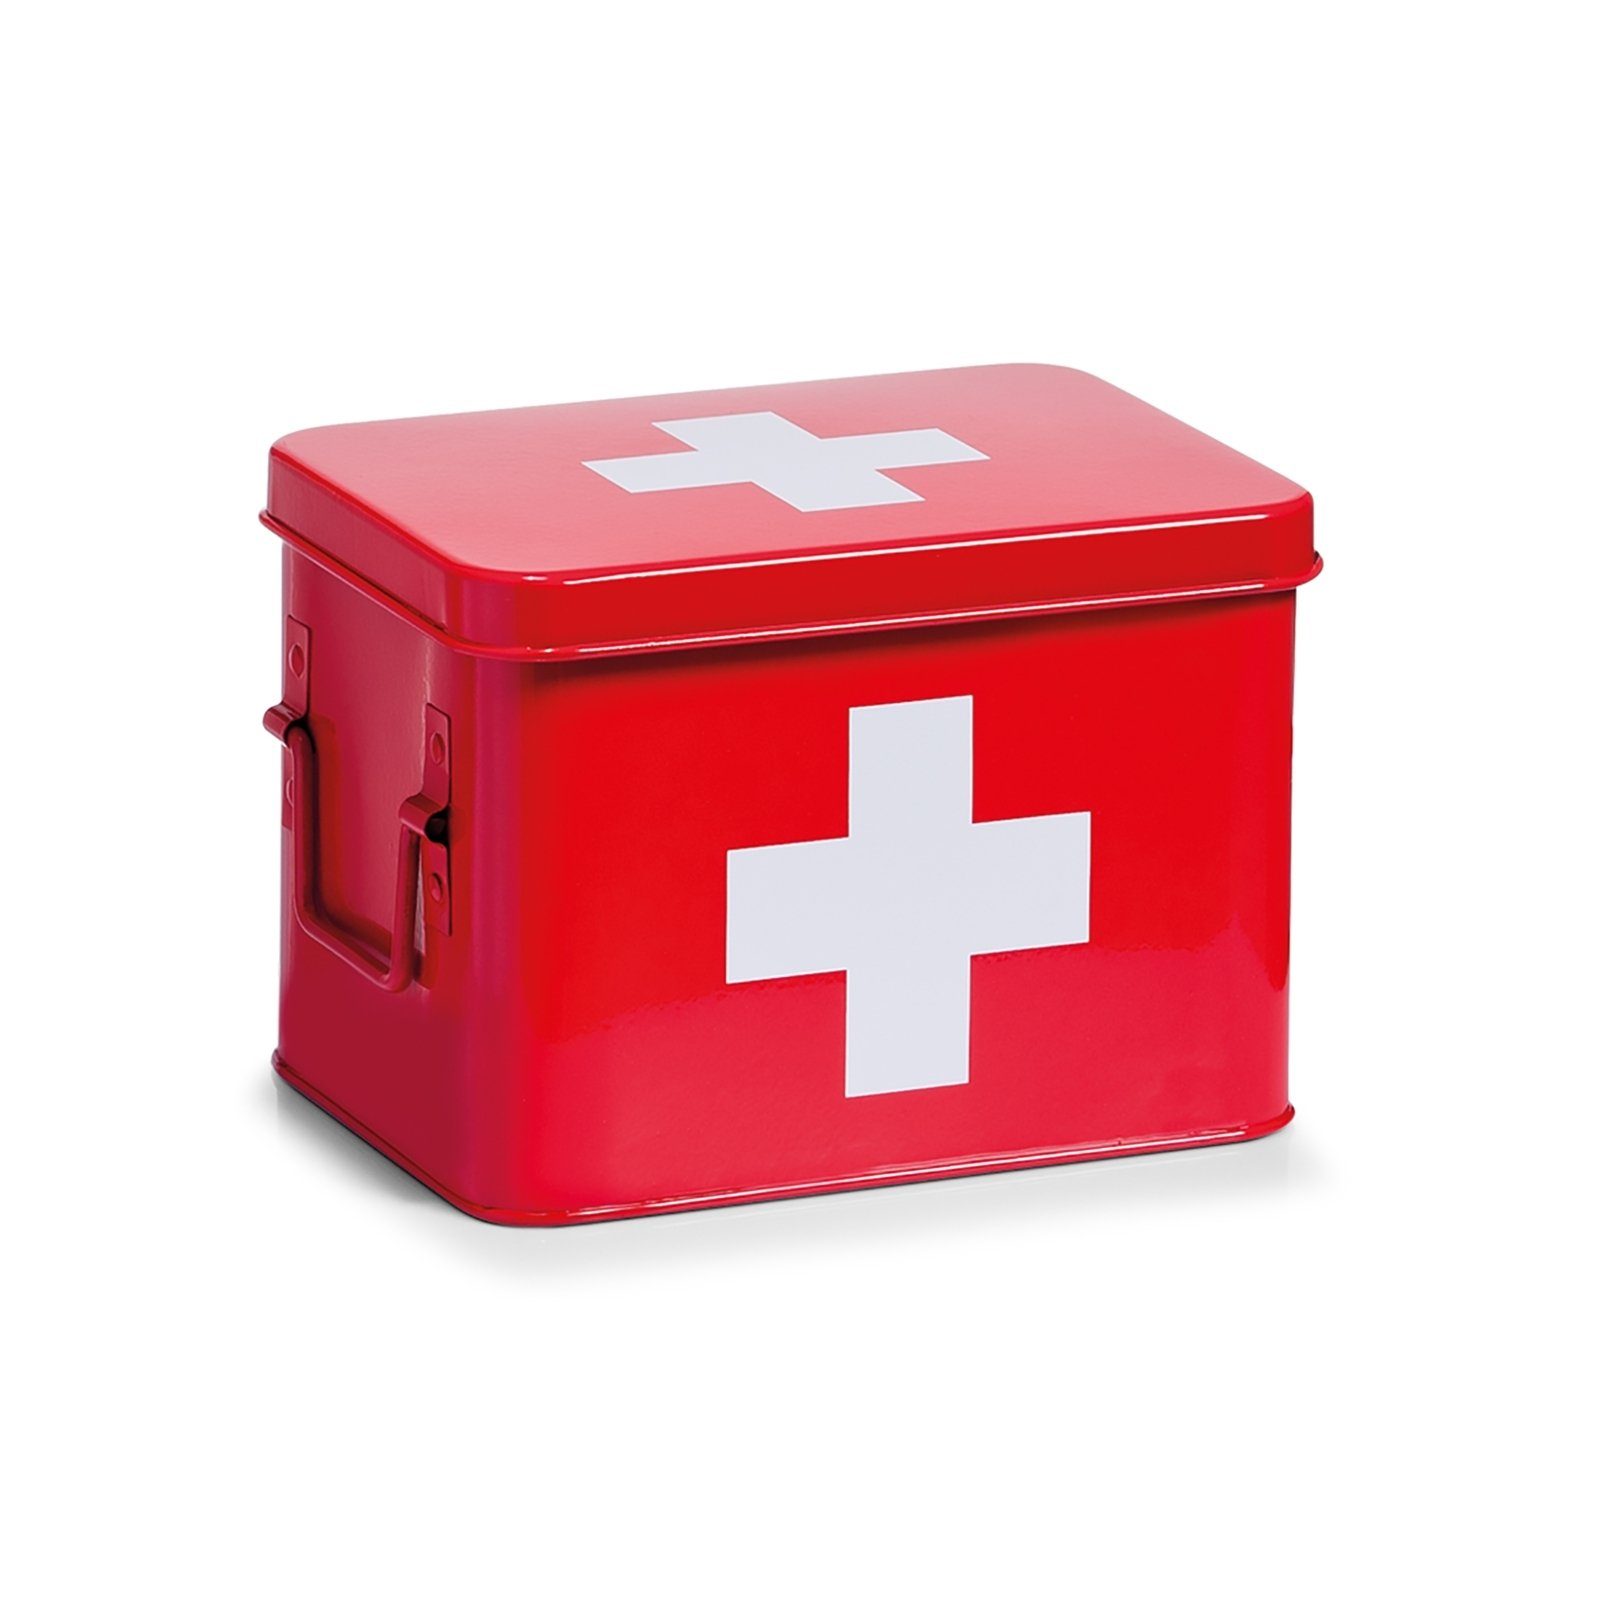 Zeller Present Medizinschrank Medizinbox Metall Rot Verbandskasten